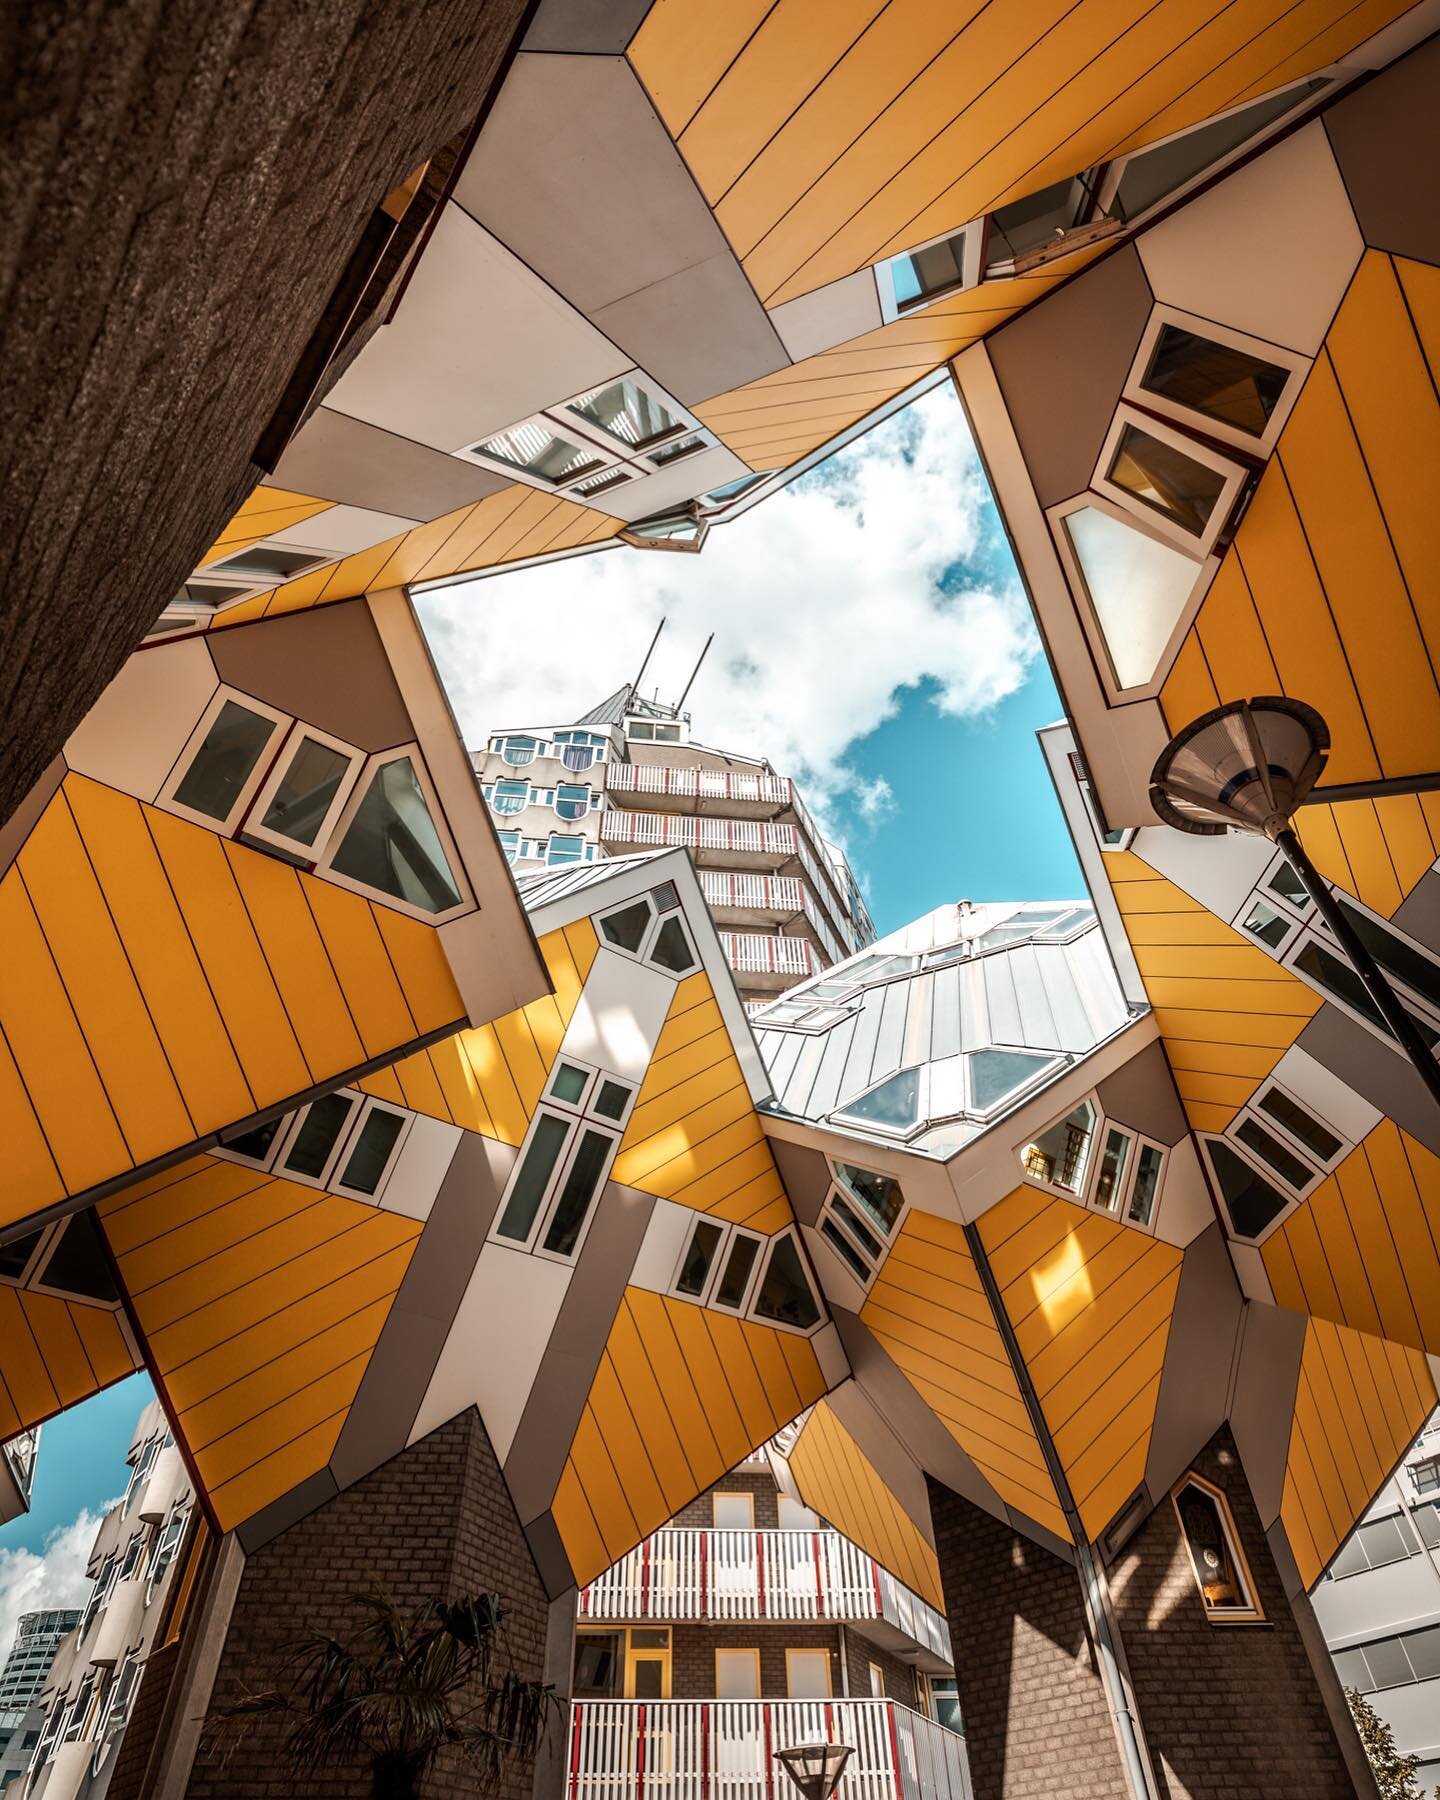 Rotterdam&rsquo;s playground! Amazing cubehouses and the pencil building. 

#symmetrykillers #loverotterdam
#visitrotterdam #vistholland #urbanphotography #cubehouses #cubehousesrotterdam 
#streetphotography #canon #canonbelgium #rotterdam #architect